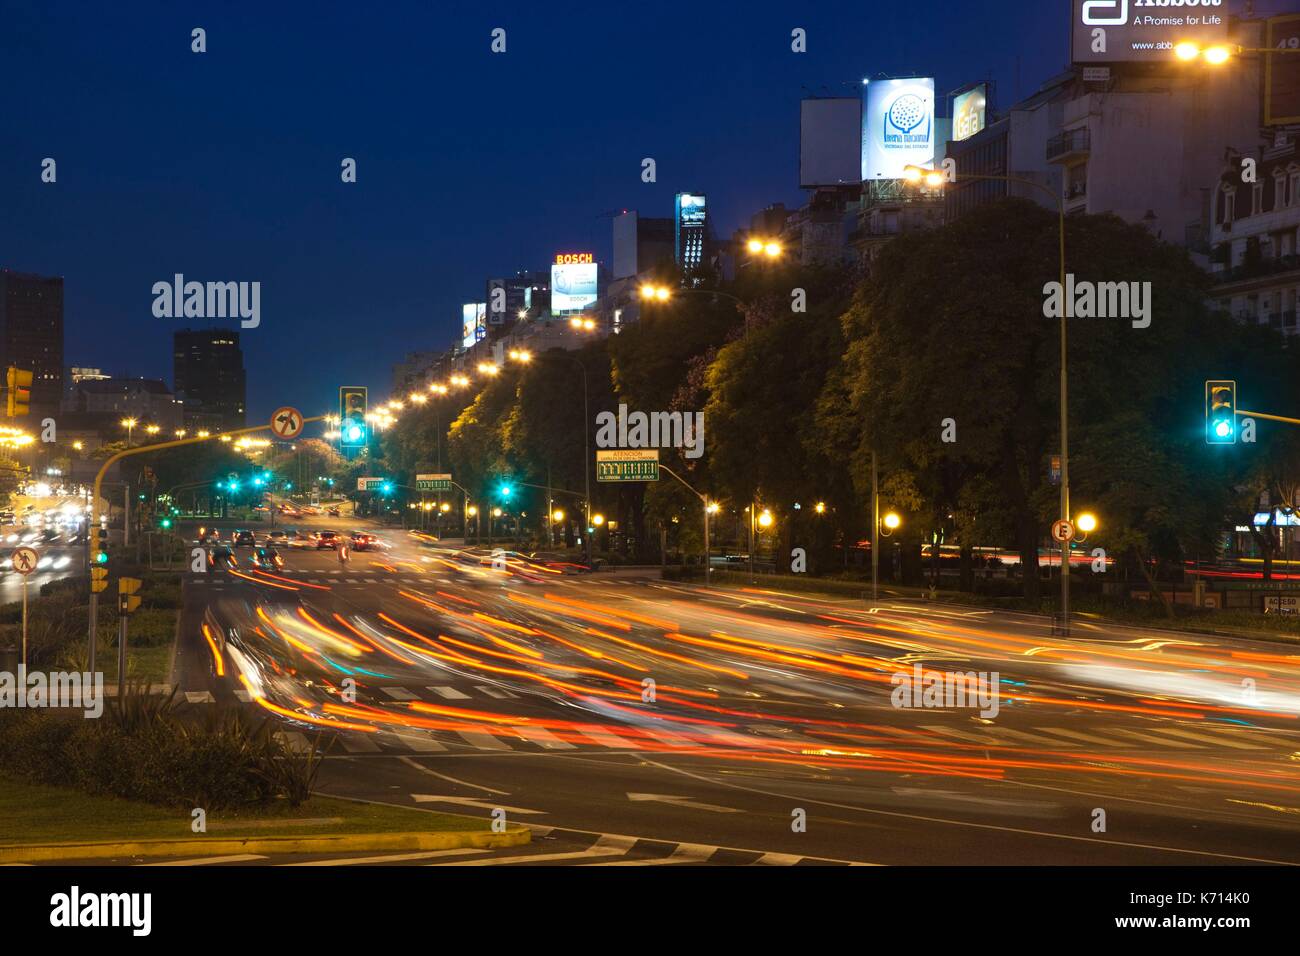 Argentina, Buenos Aires, evening traffic on Avenida 9 de Julio near Plaza de la Republica Stock Photo